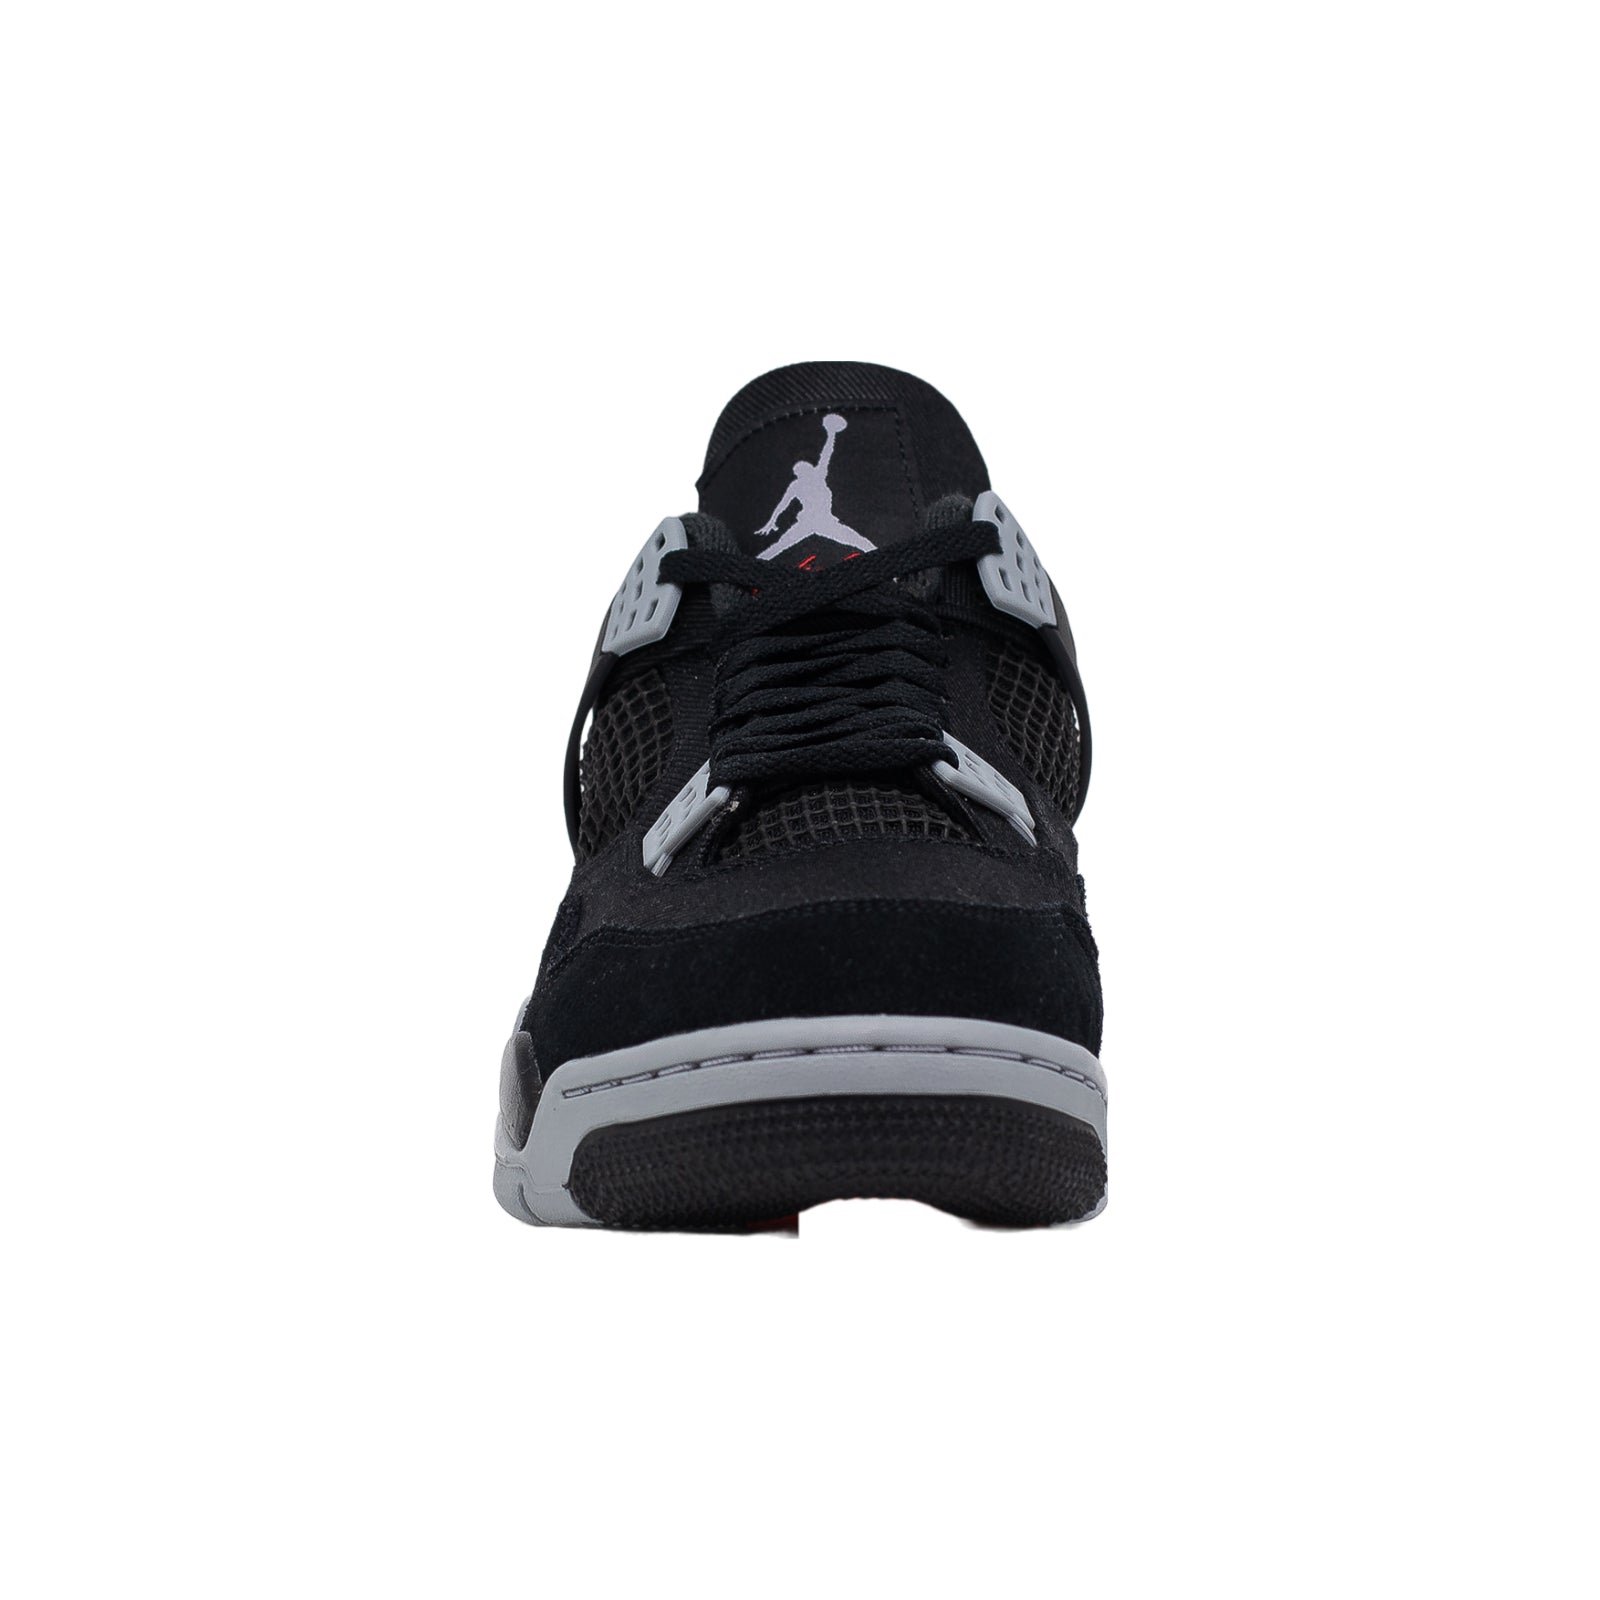 Air Jordan 4, Black Canvas